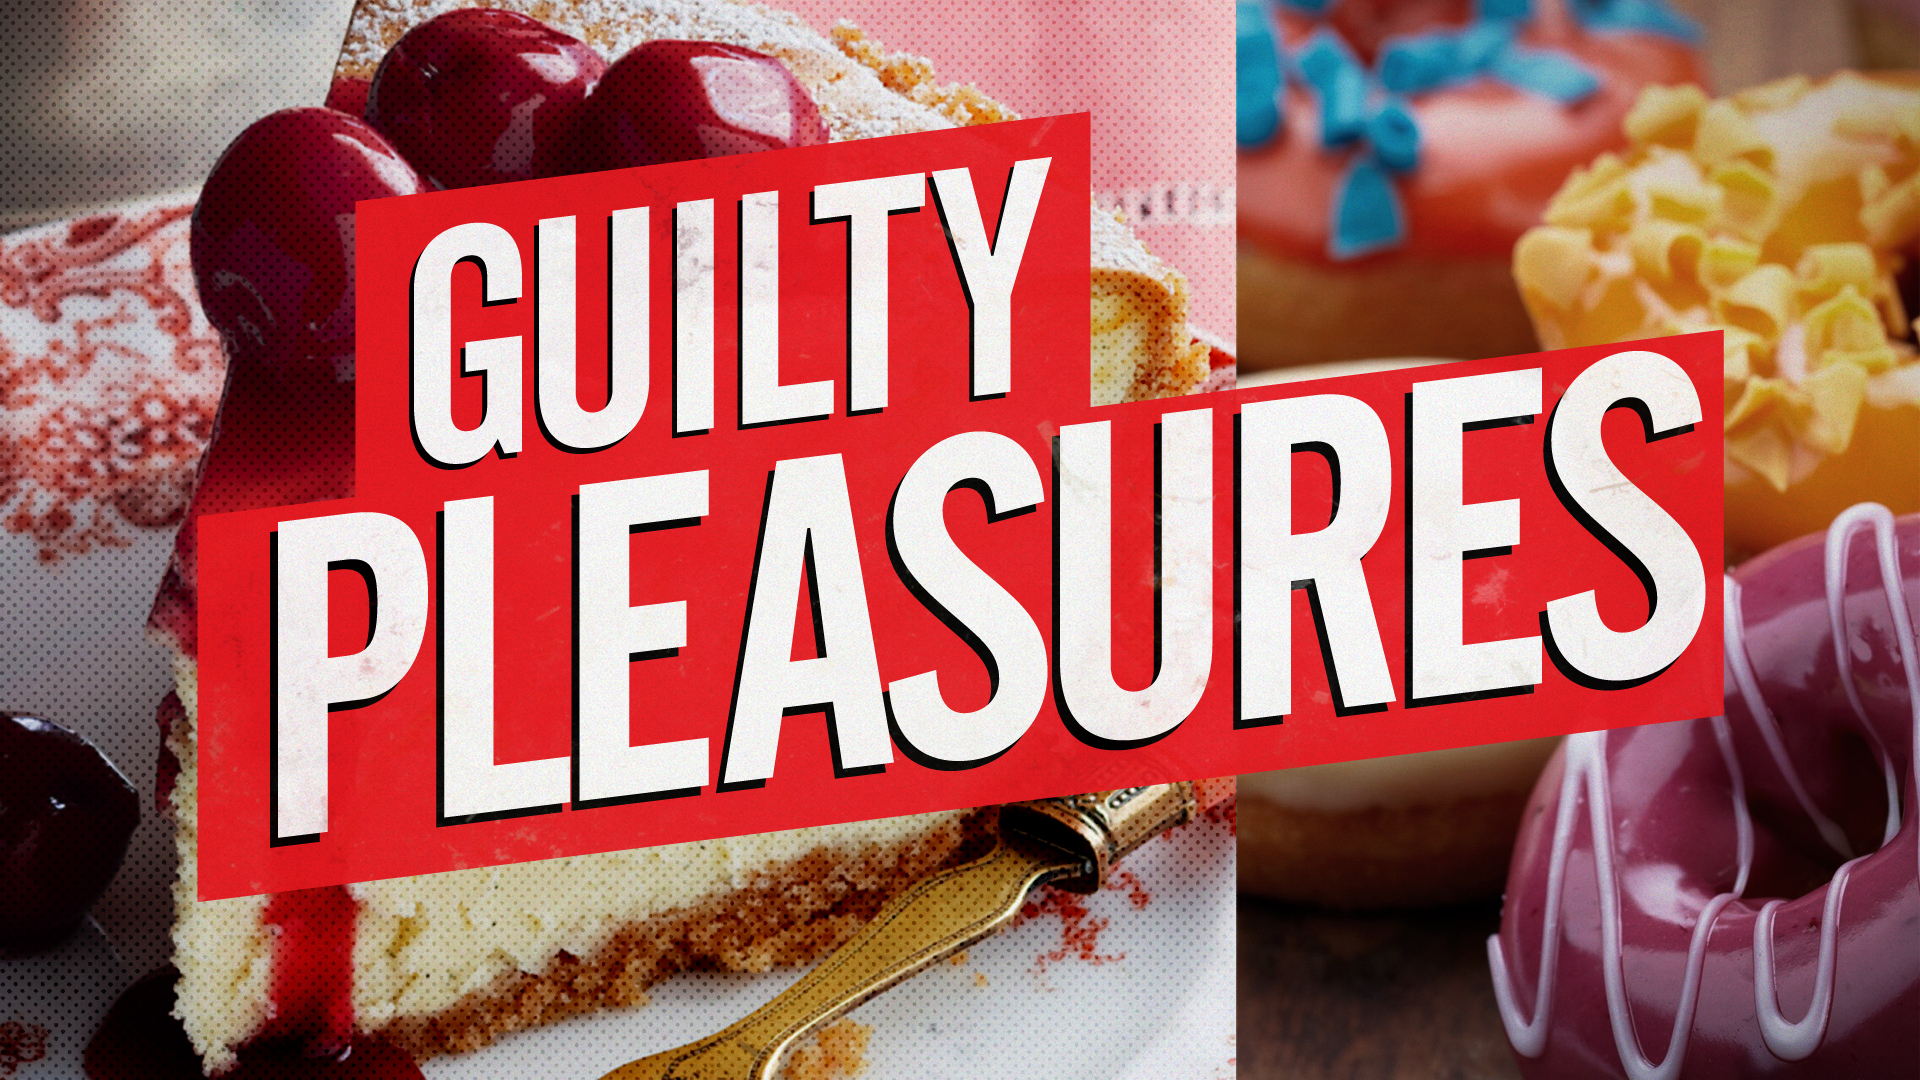 Guilty Pleasures, Top 5 Restaurants: Food Network Series Premiere on Novemb...